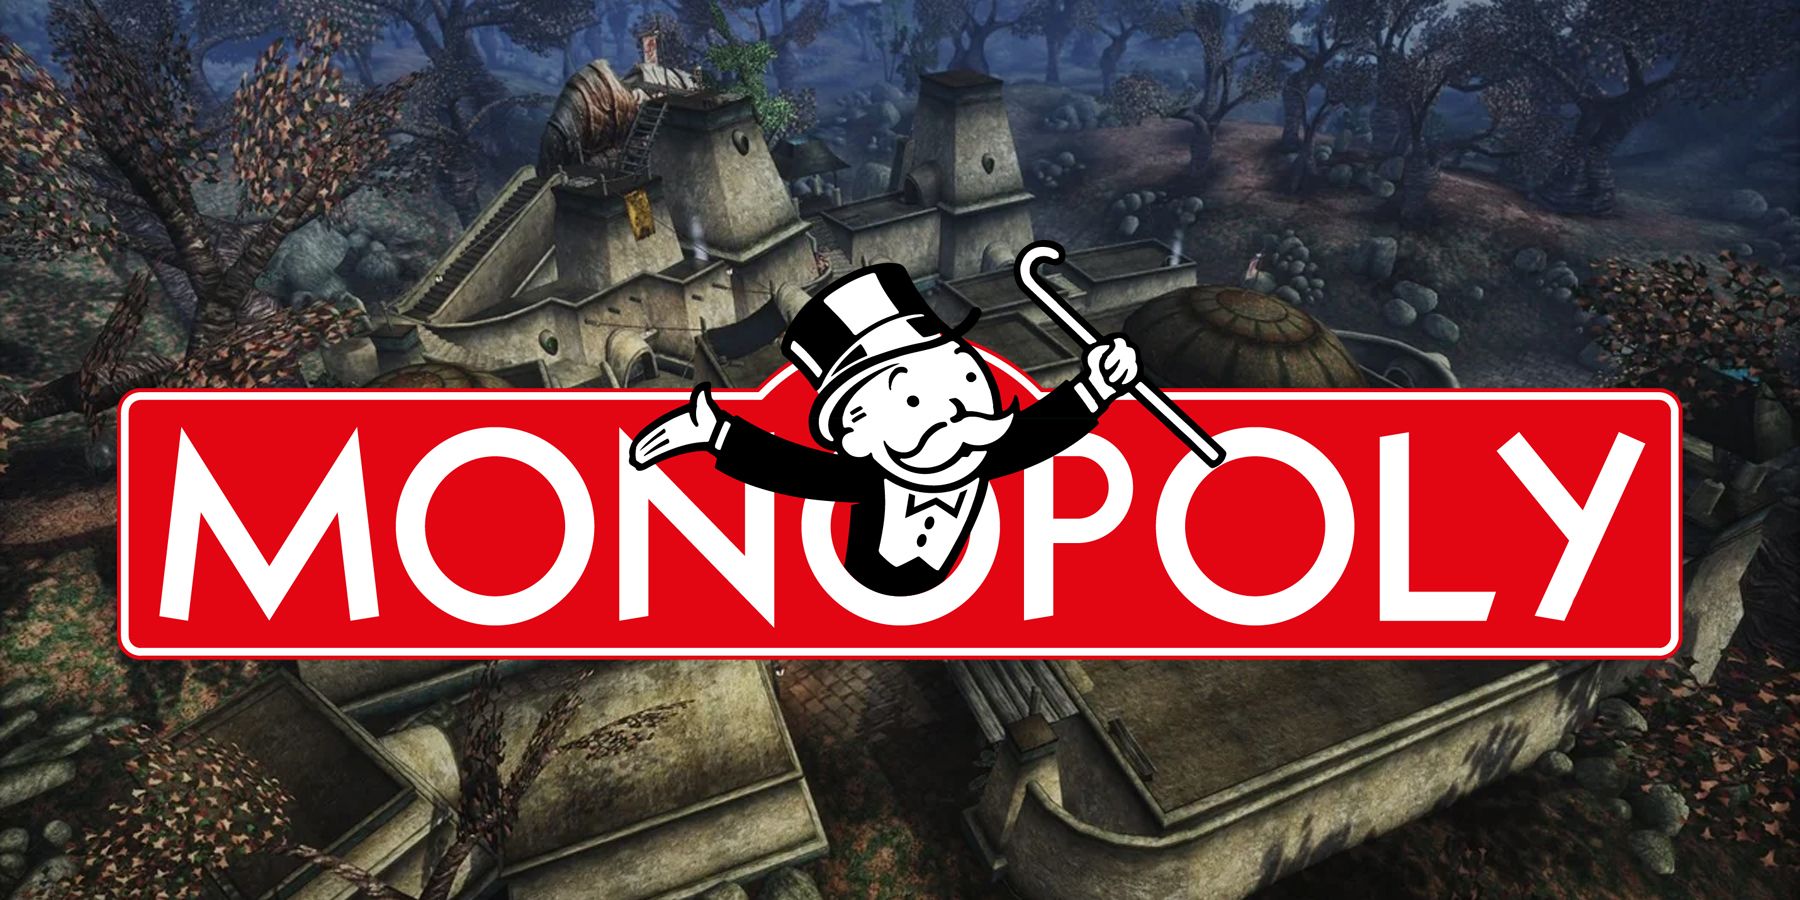 Morrowind Monopoly